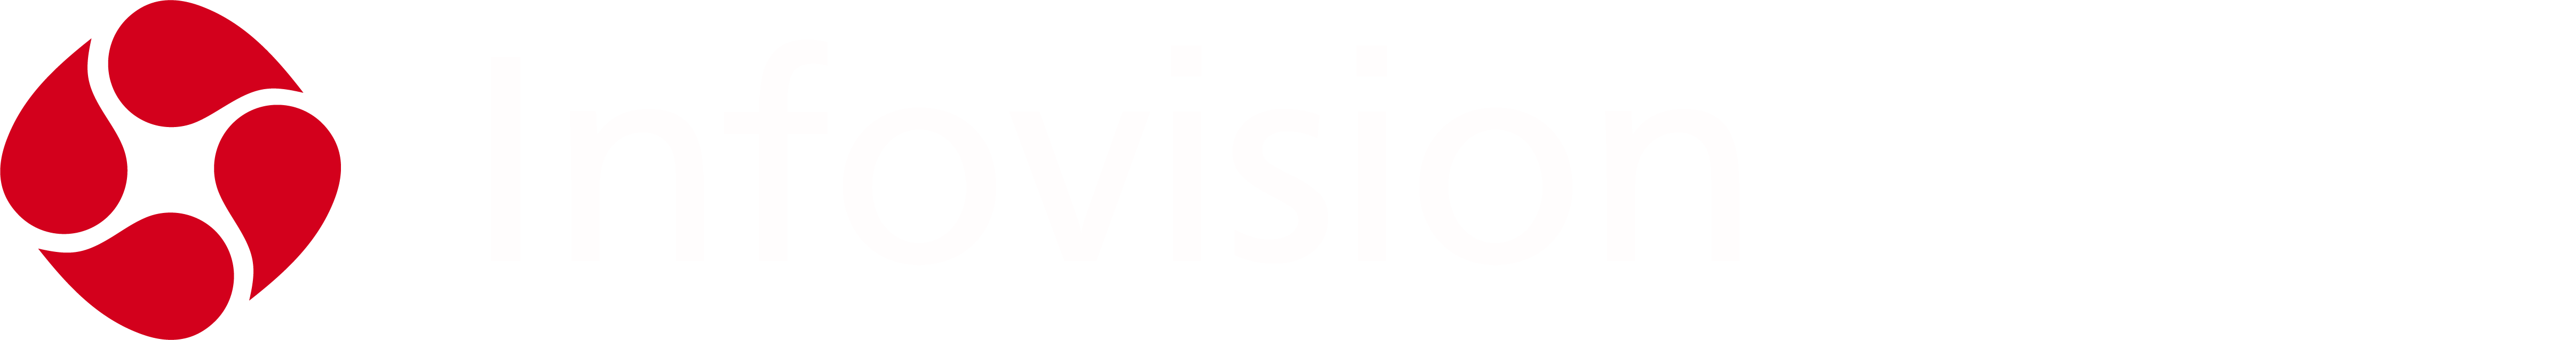 InfoVision logo horizontal red white